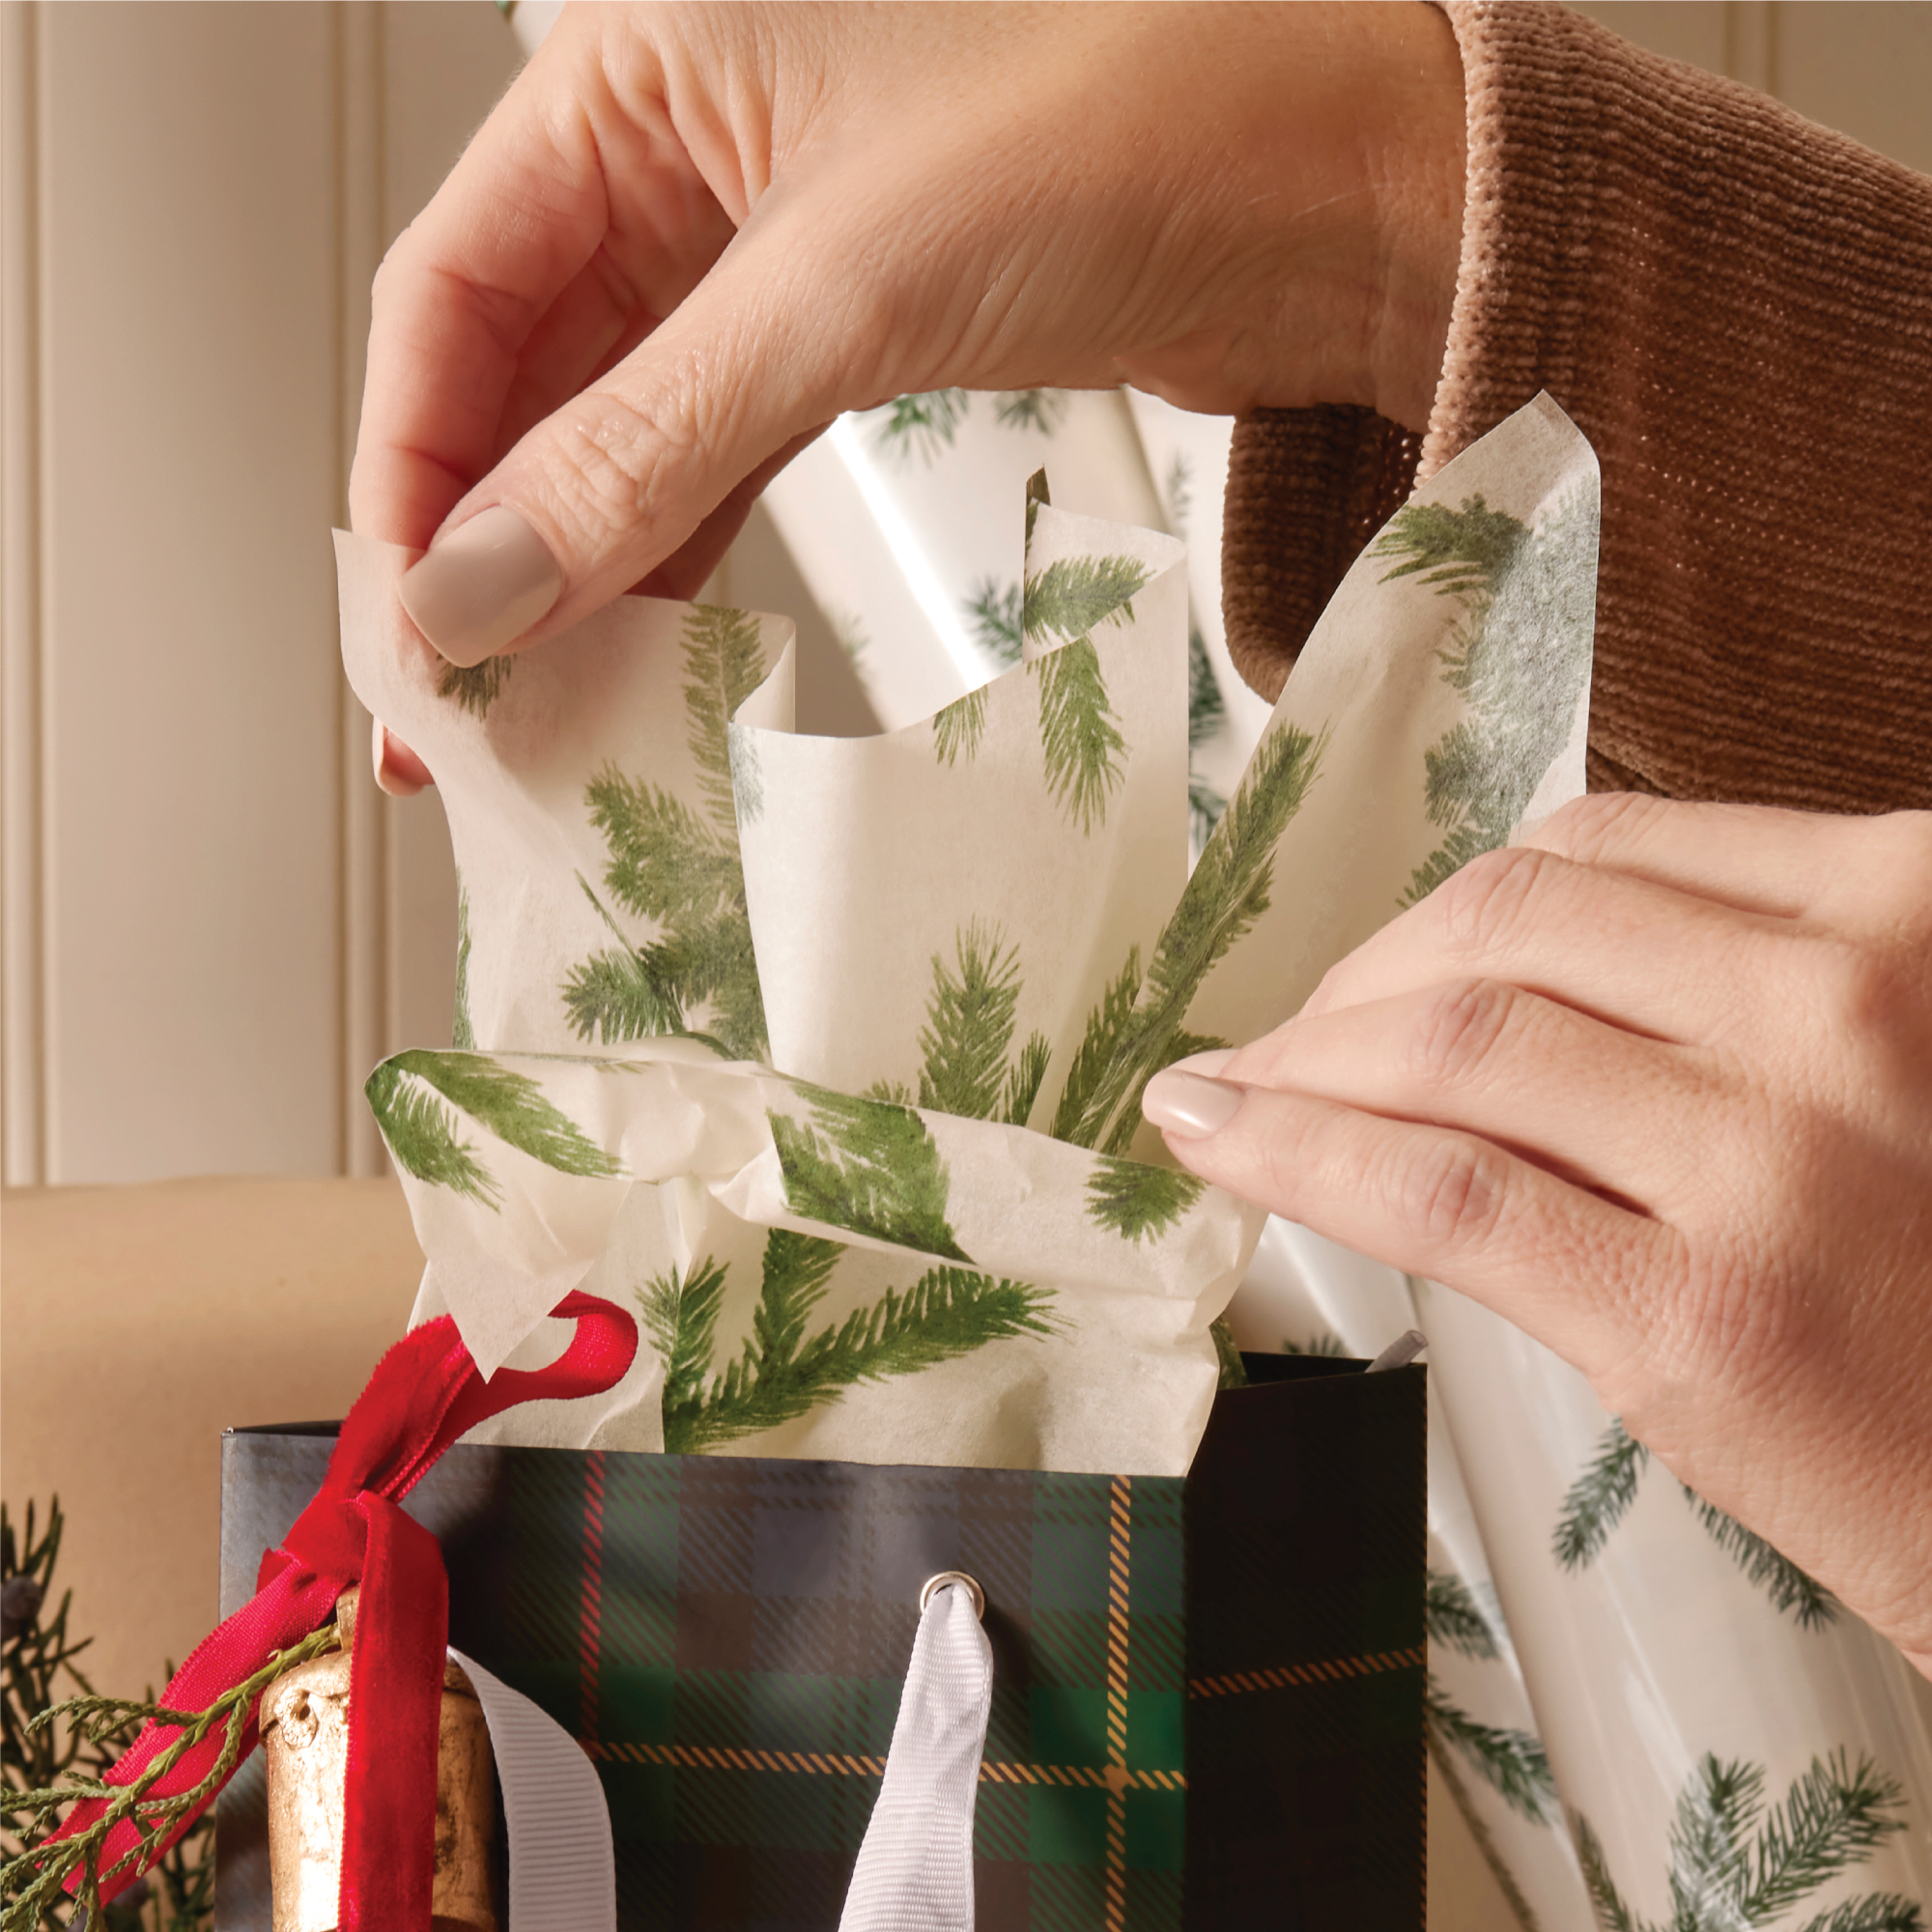 3 Impressive (but easy) Tissue Paper Gift Wrap Ideas - YouTube